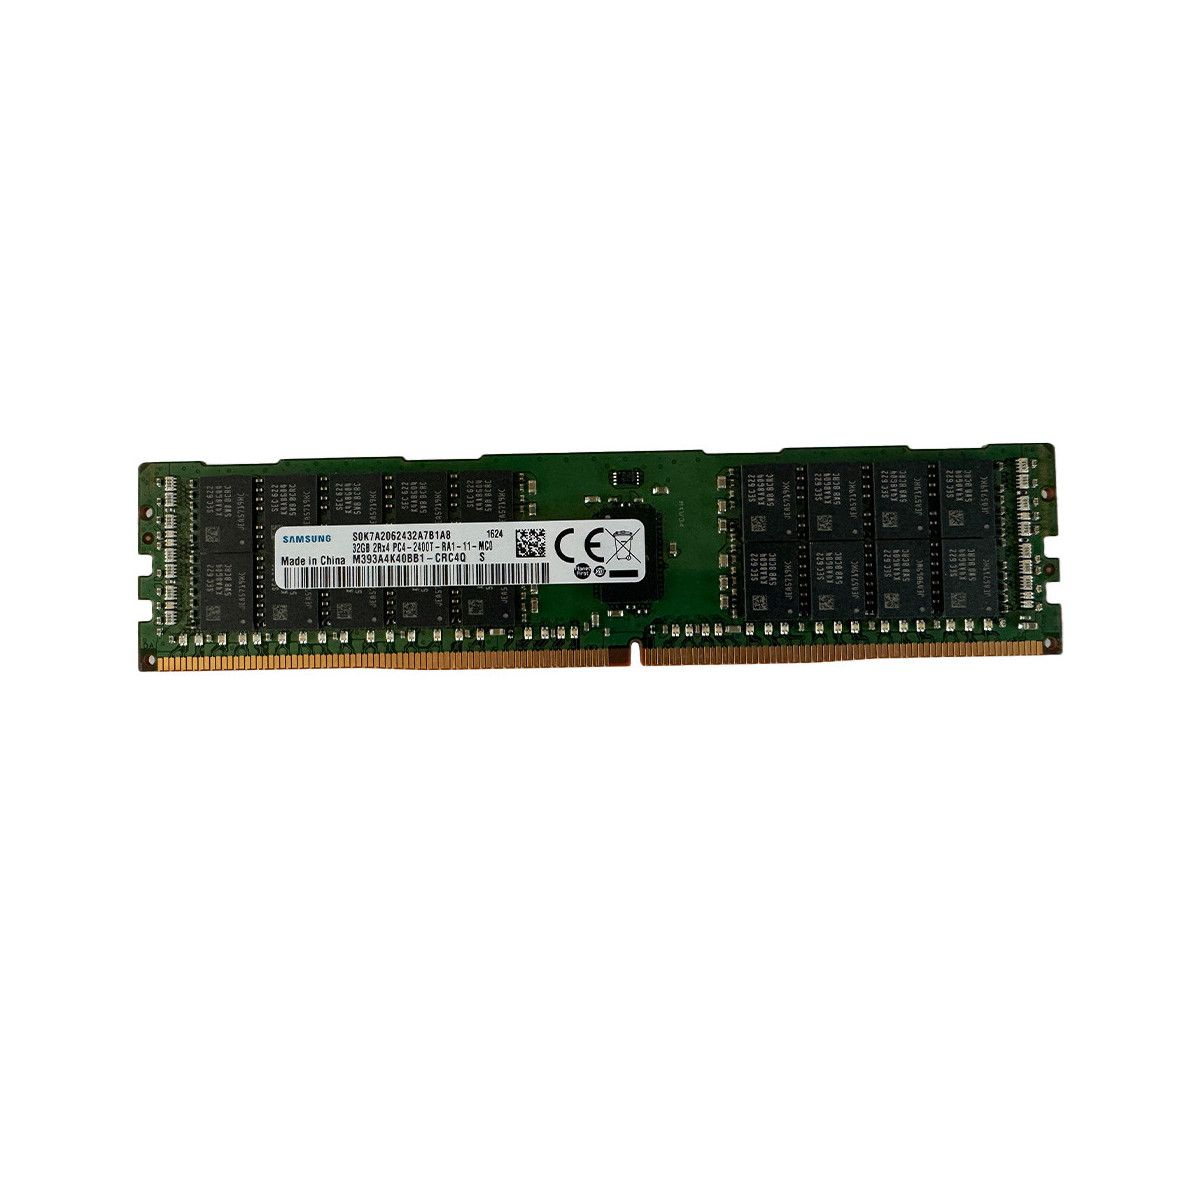 SNSCPC7GC/32G-MS - Memstar 1x 32GB DDR4-2400 RDIMM PC4-19200T-R - Memorie OEM compatibilă Mem-Star 1 - Memstar 